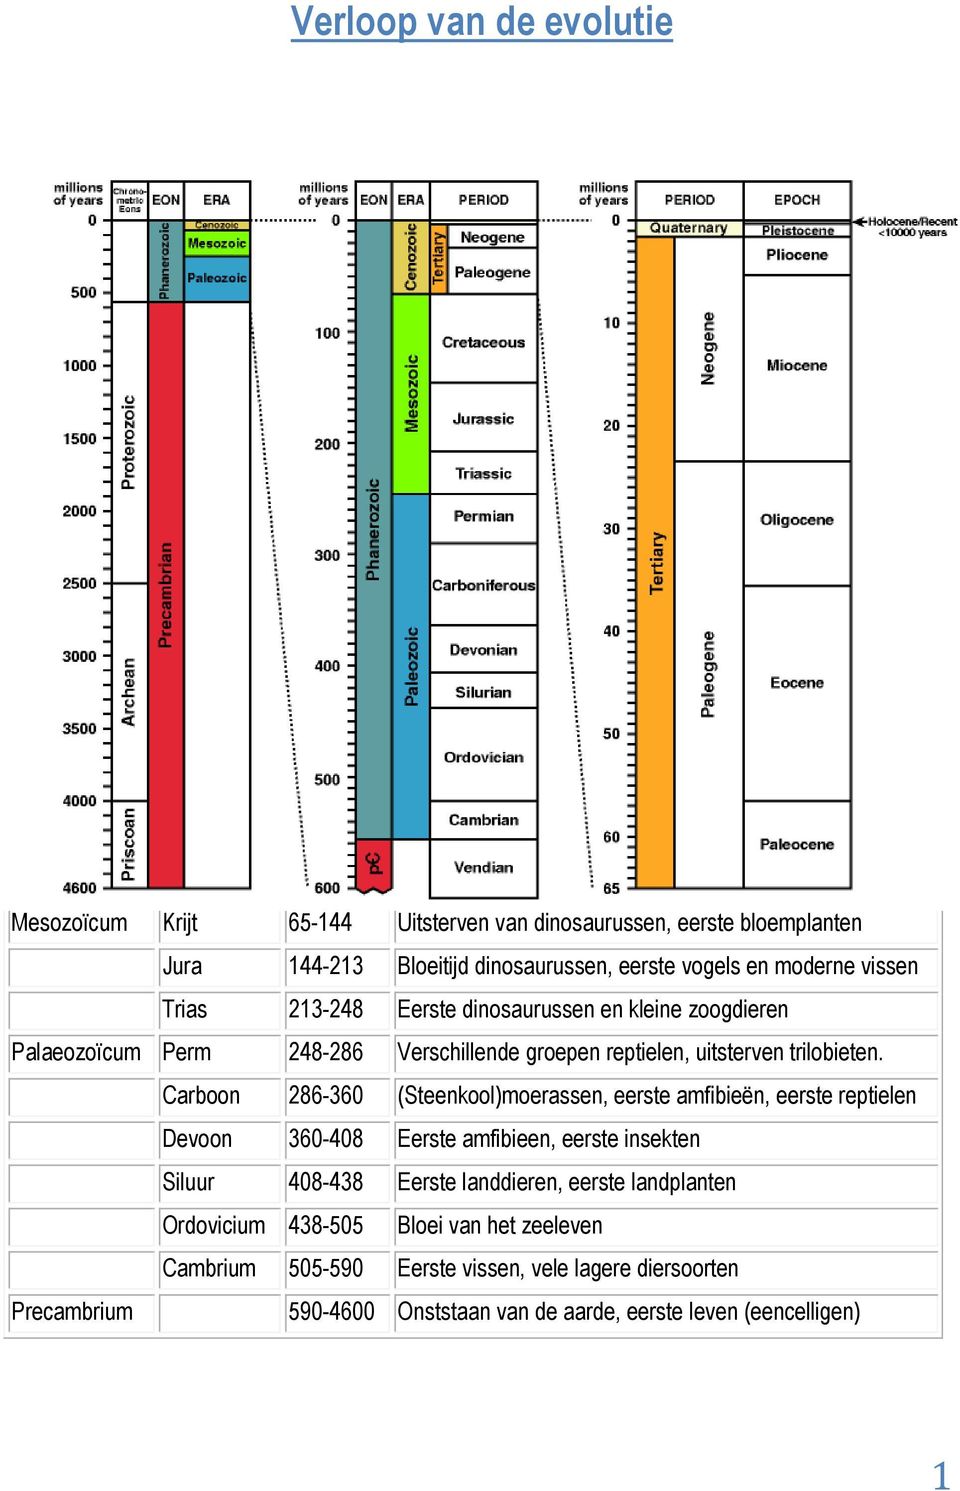 Palaeozoïcum Perm 248-286 Verschillende groepen reptielen, uitsterven trilobieten.